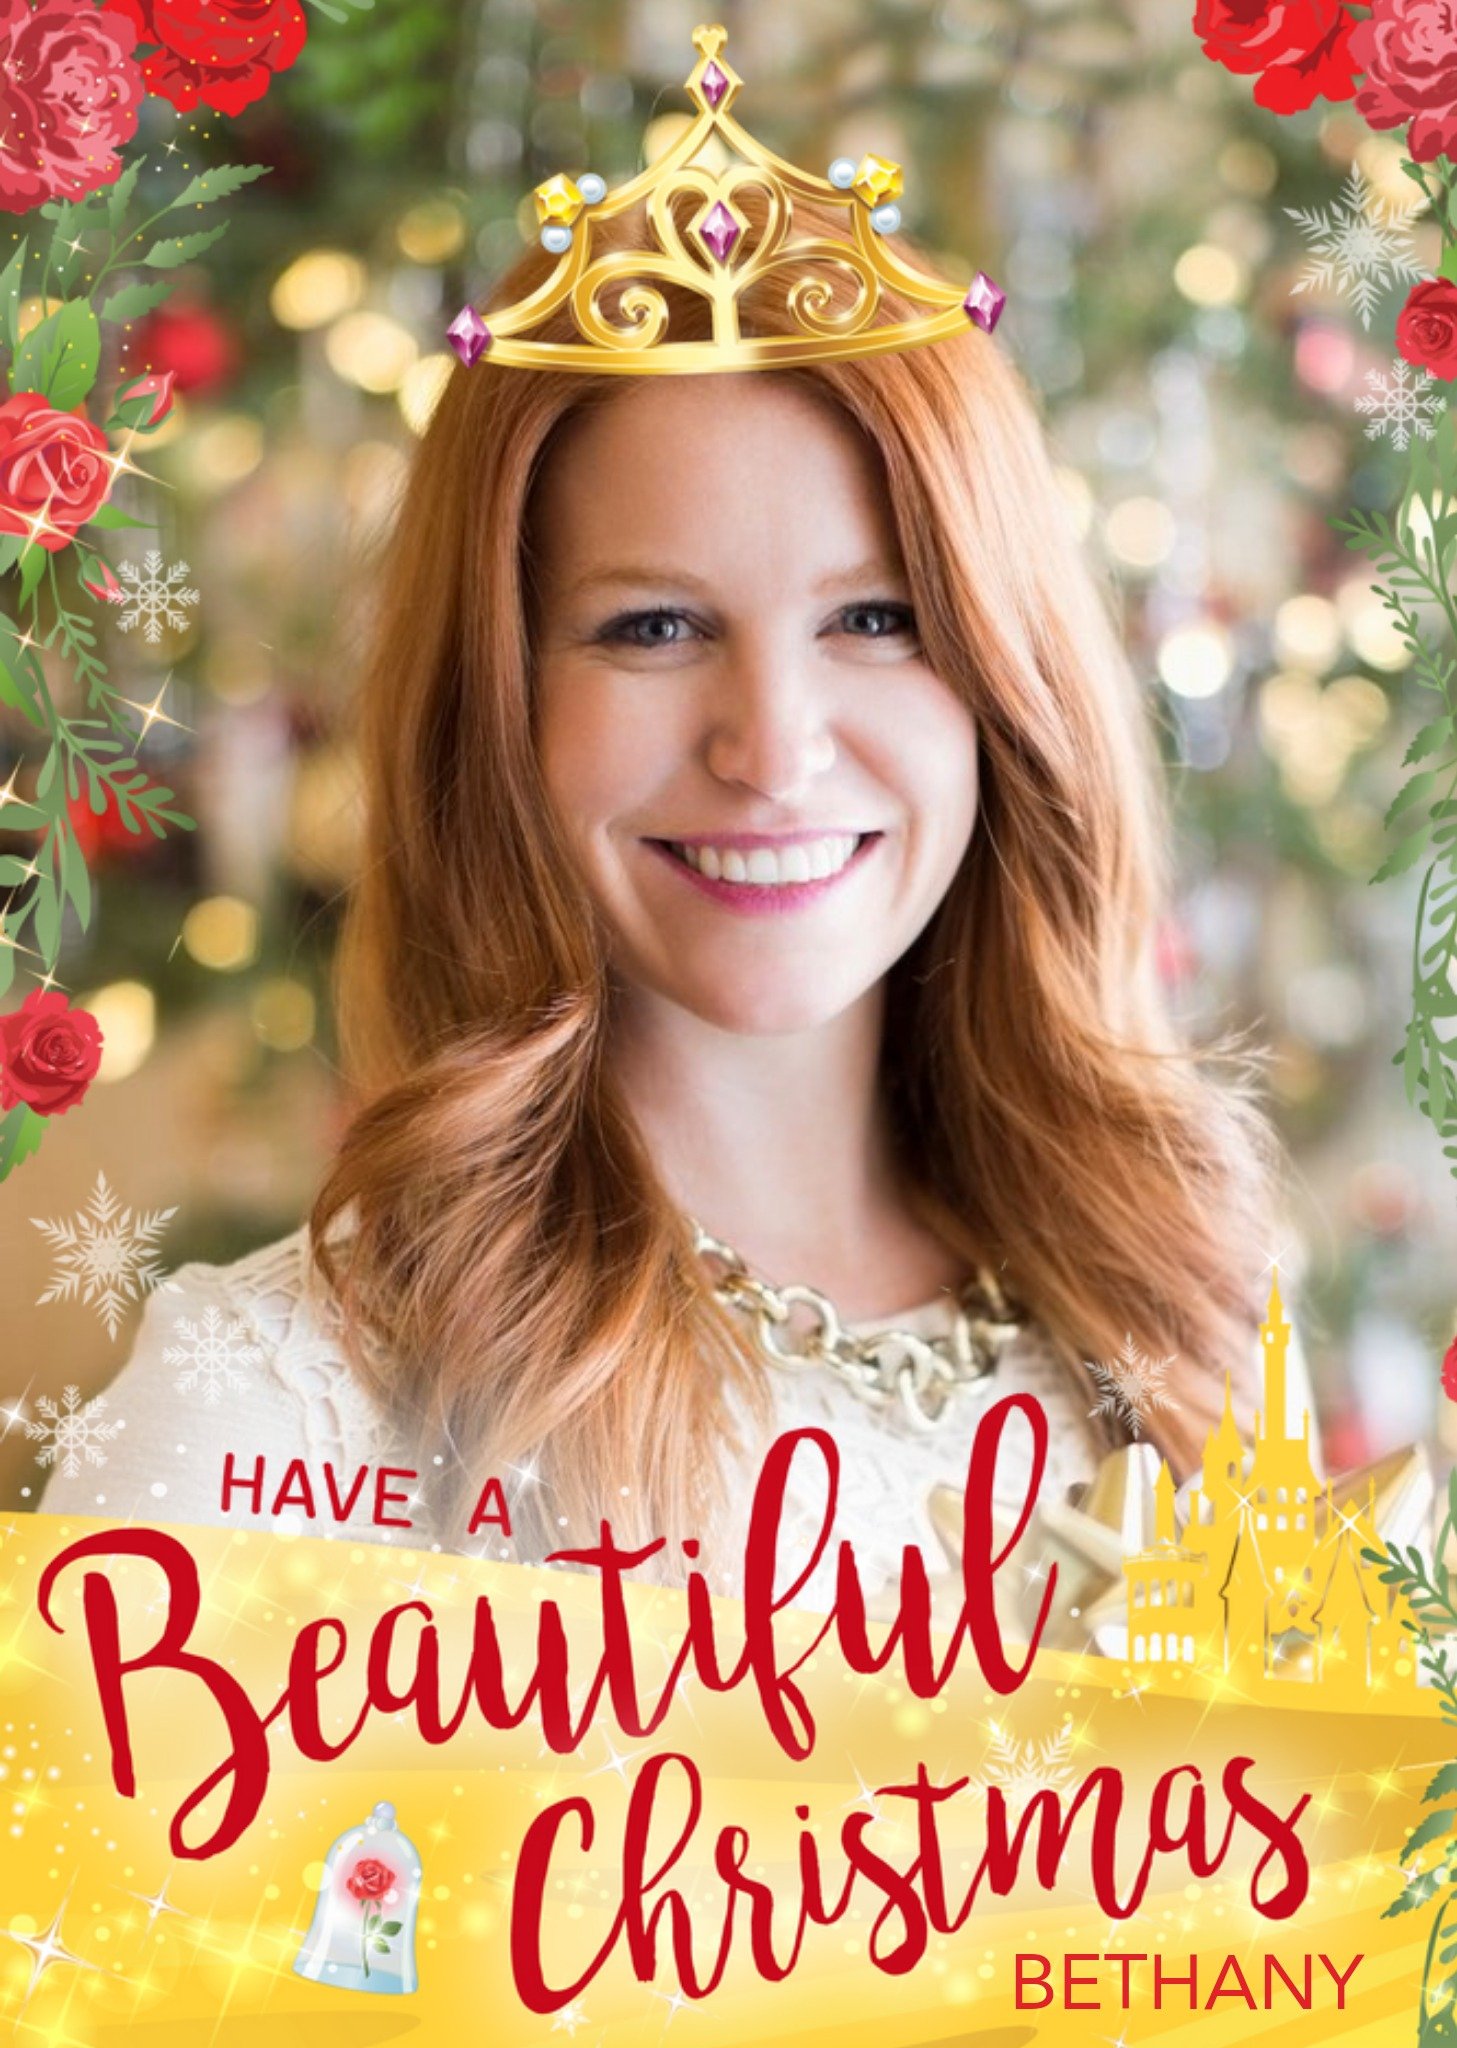 Disney Princess Beauty And The Beast Photo Upload Christmas Card Ecard